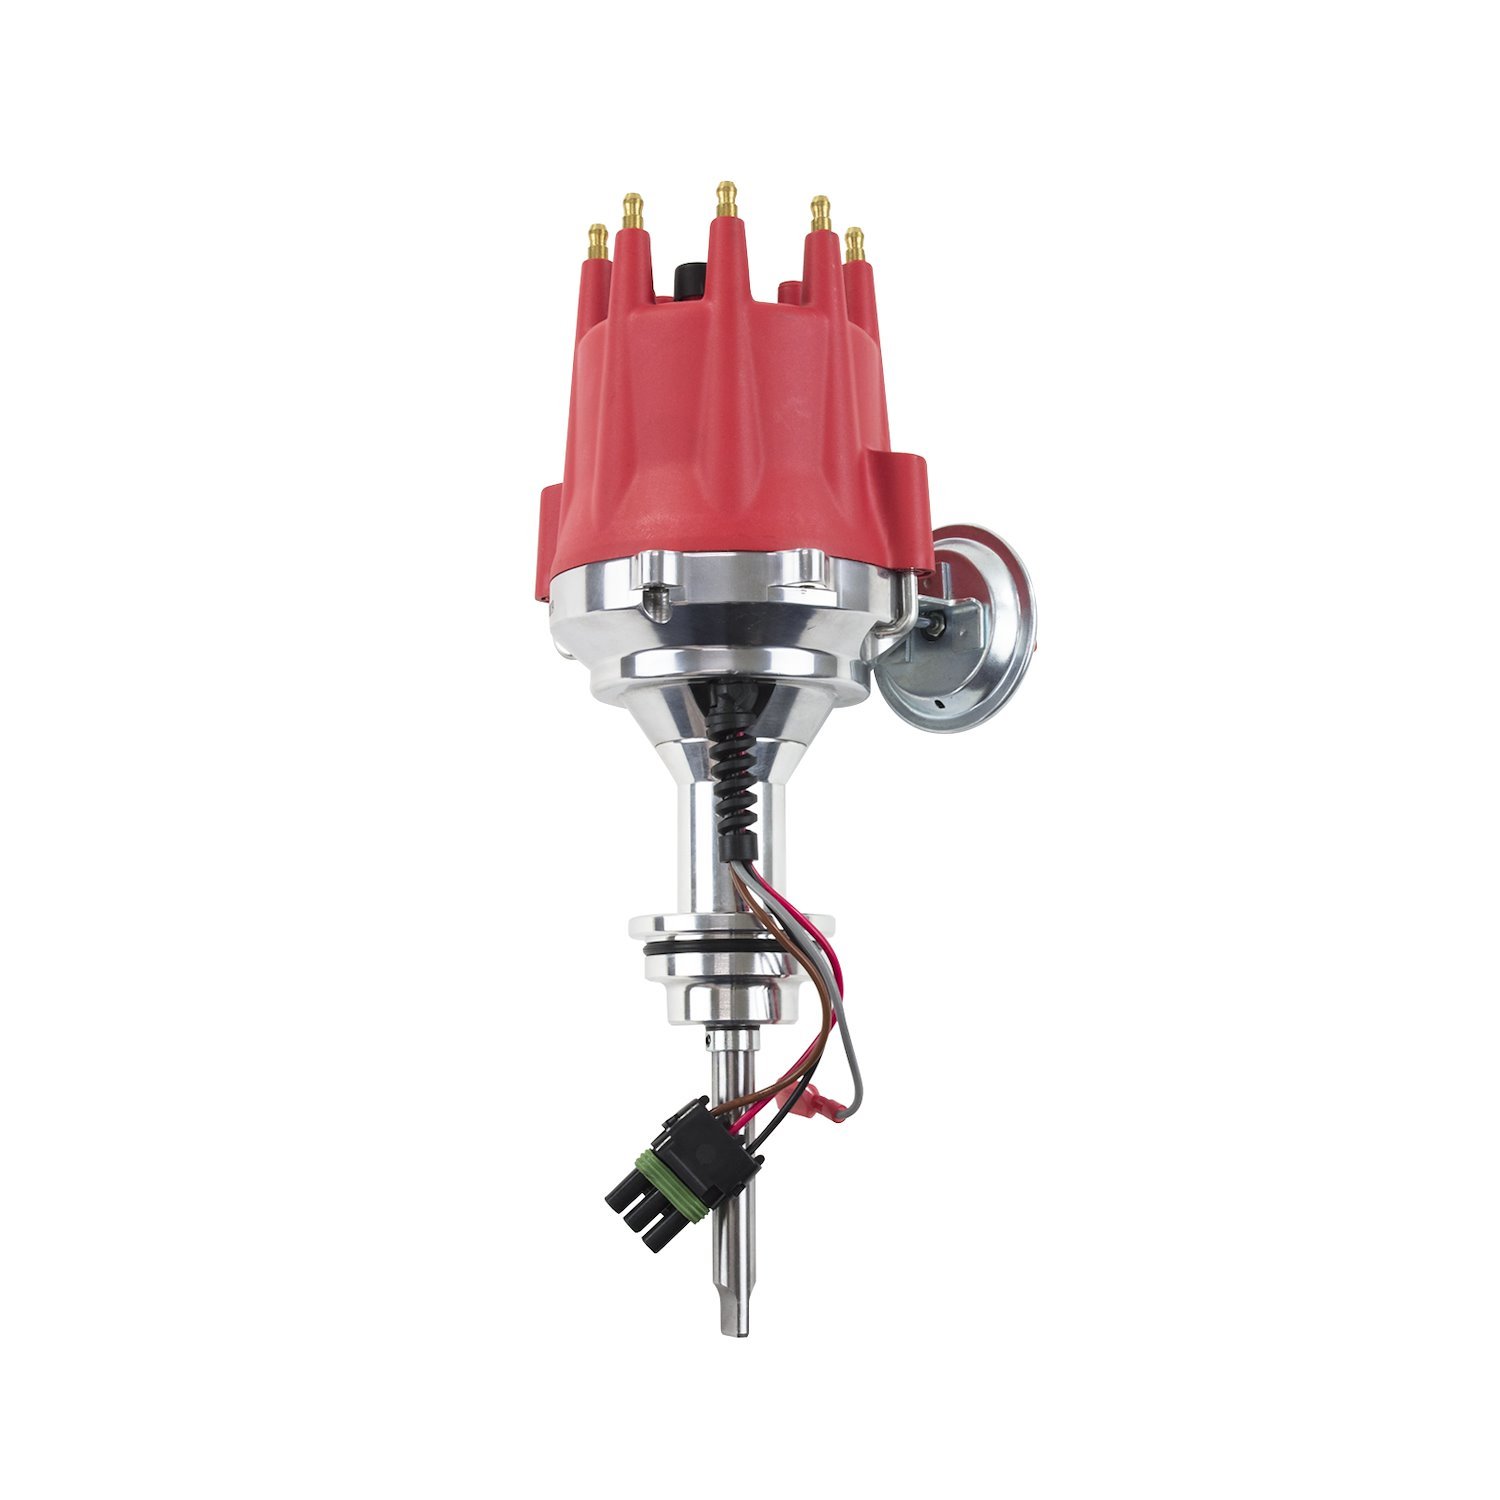 JM7730R Pro Series Pro Billet Distributor, Chrysler "FirePower" (Hemi) V8 (392), Red